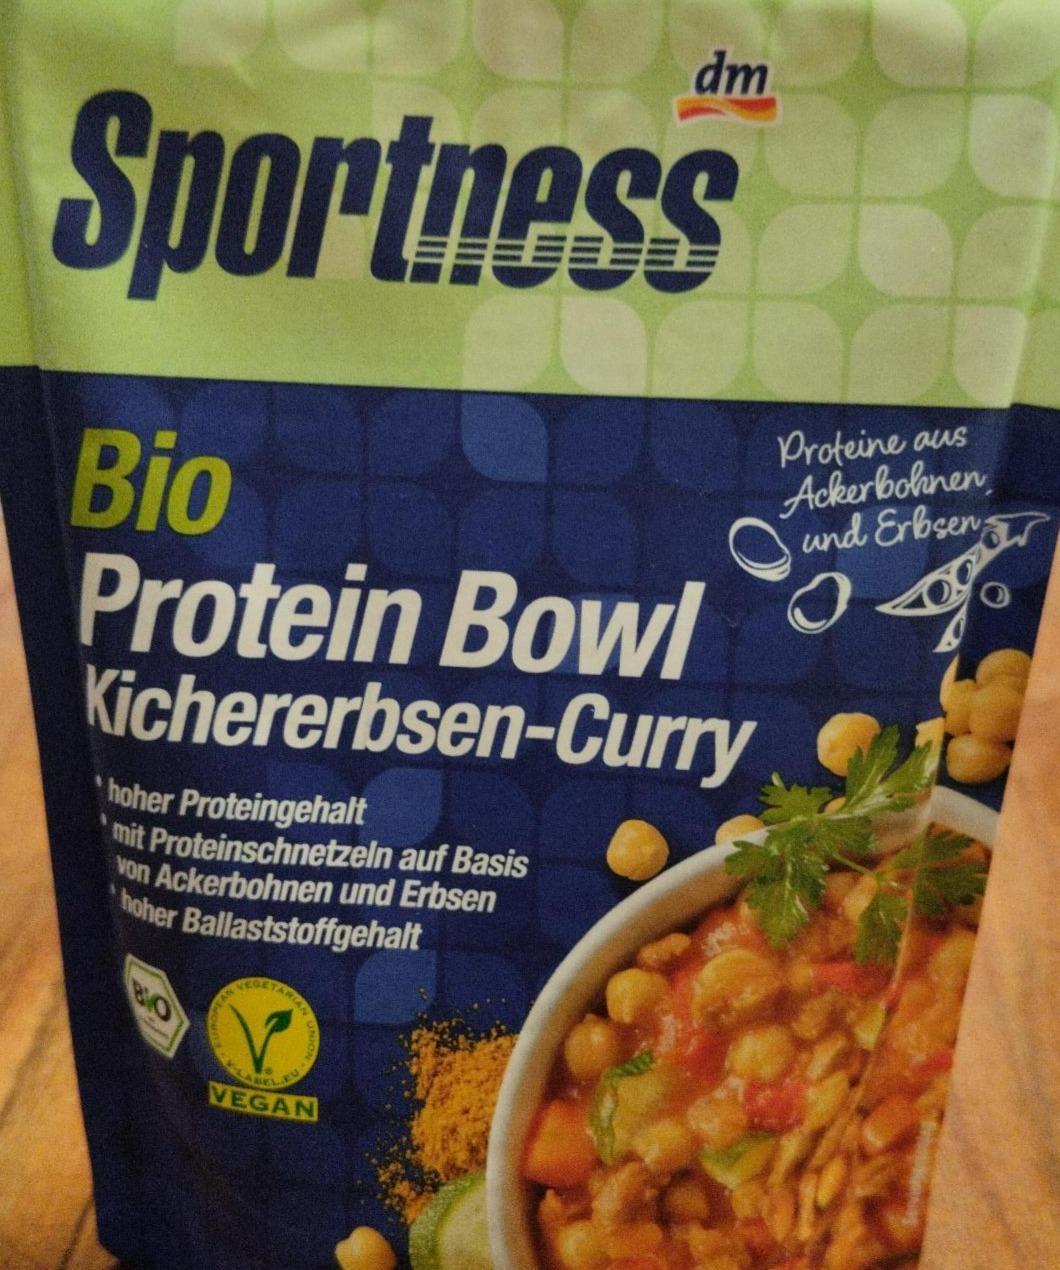 Fotografie - Bio Protein Bowl Kichererbsen-Curry Sportness